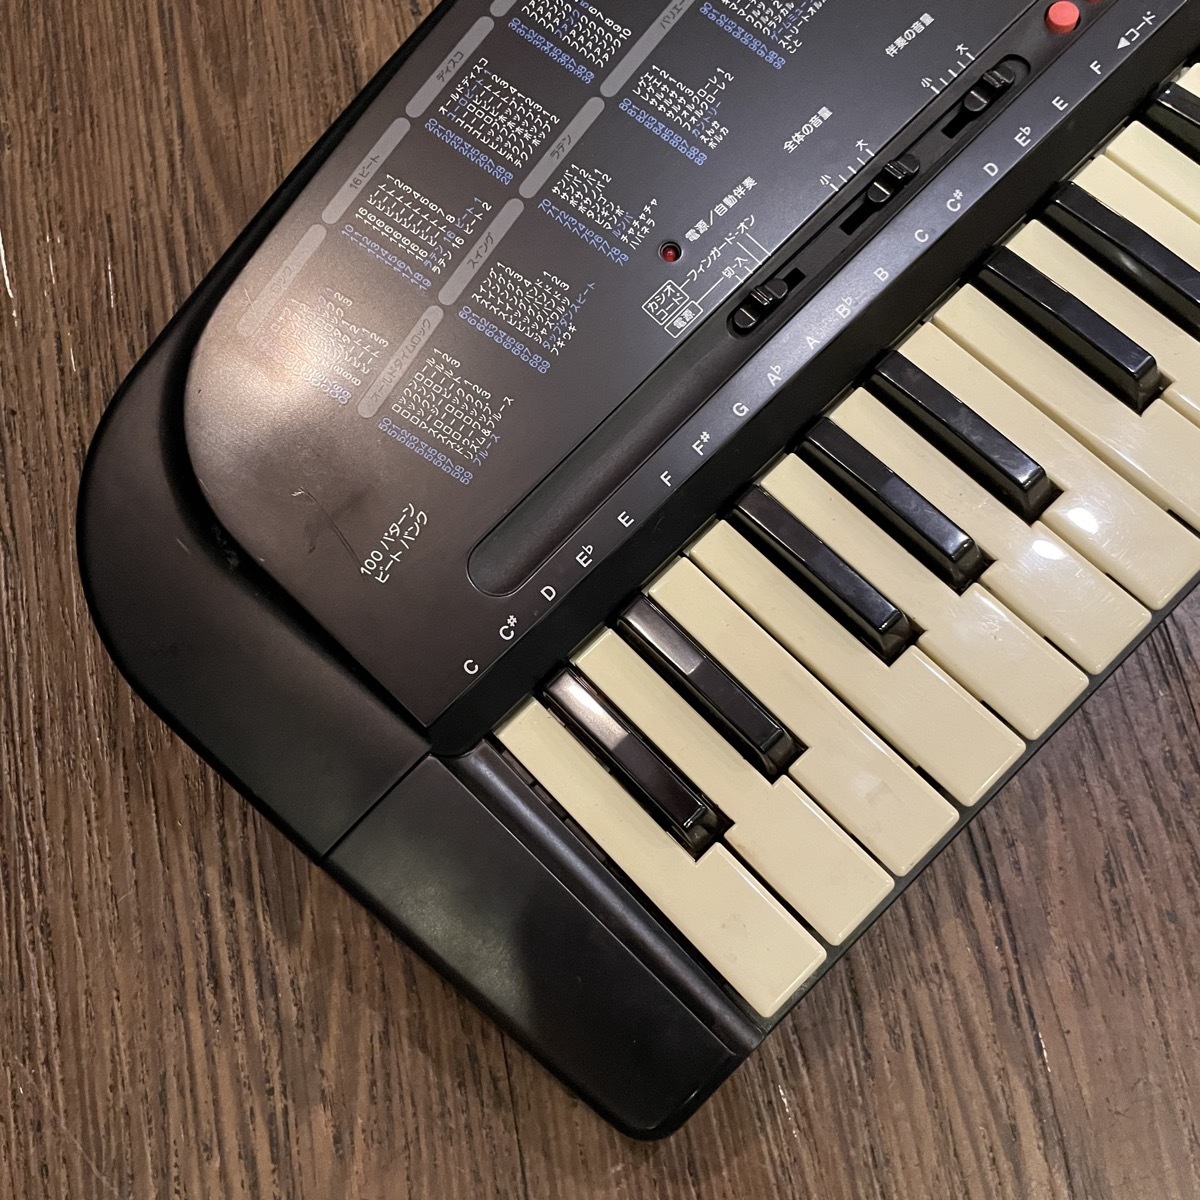 Casio MA-120 Keyboard Casio keyboard Junk - m102